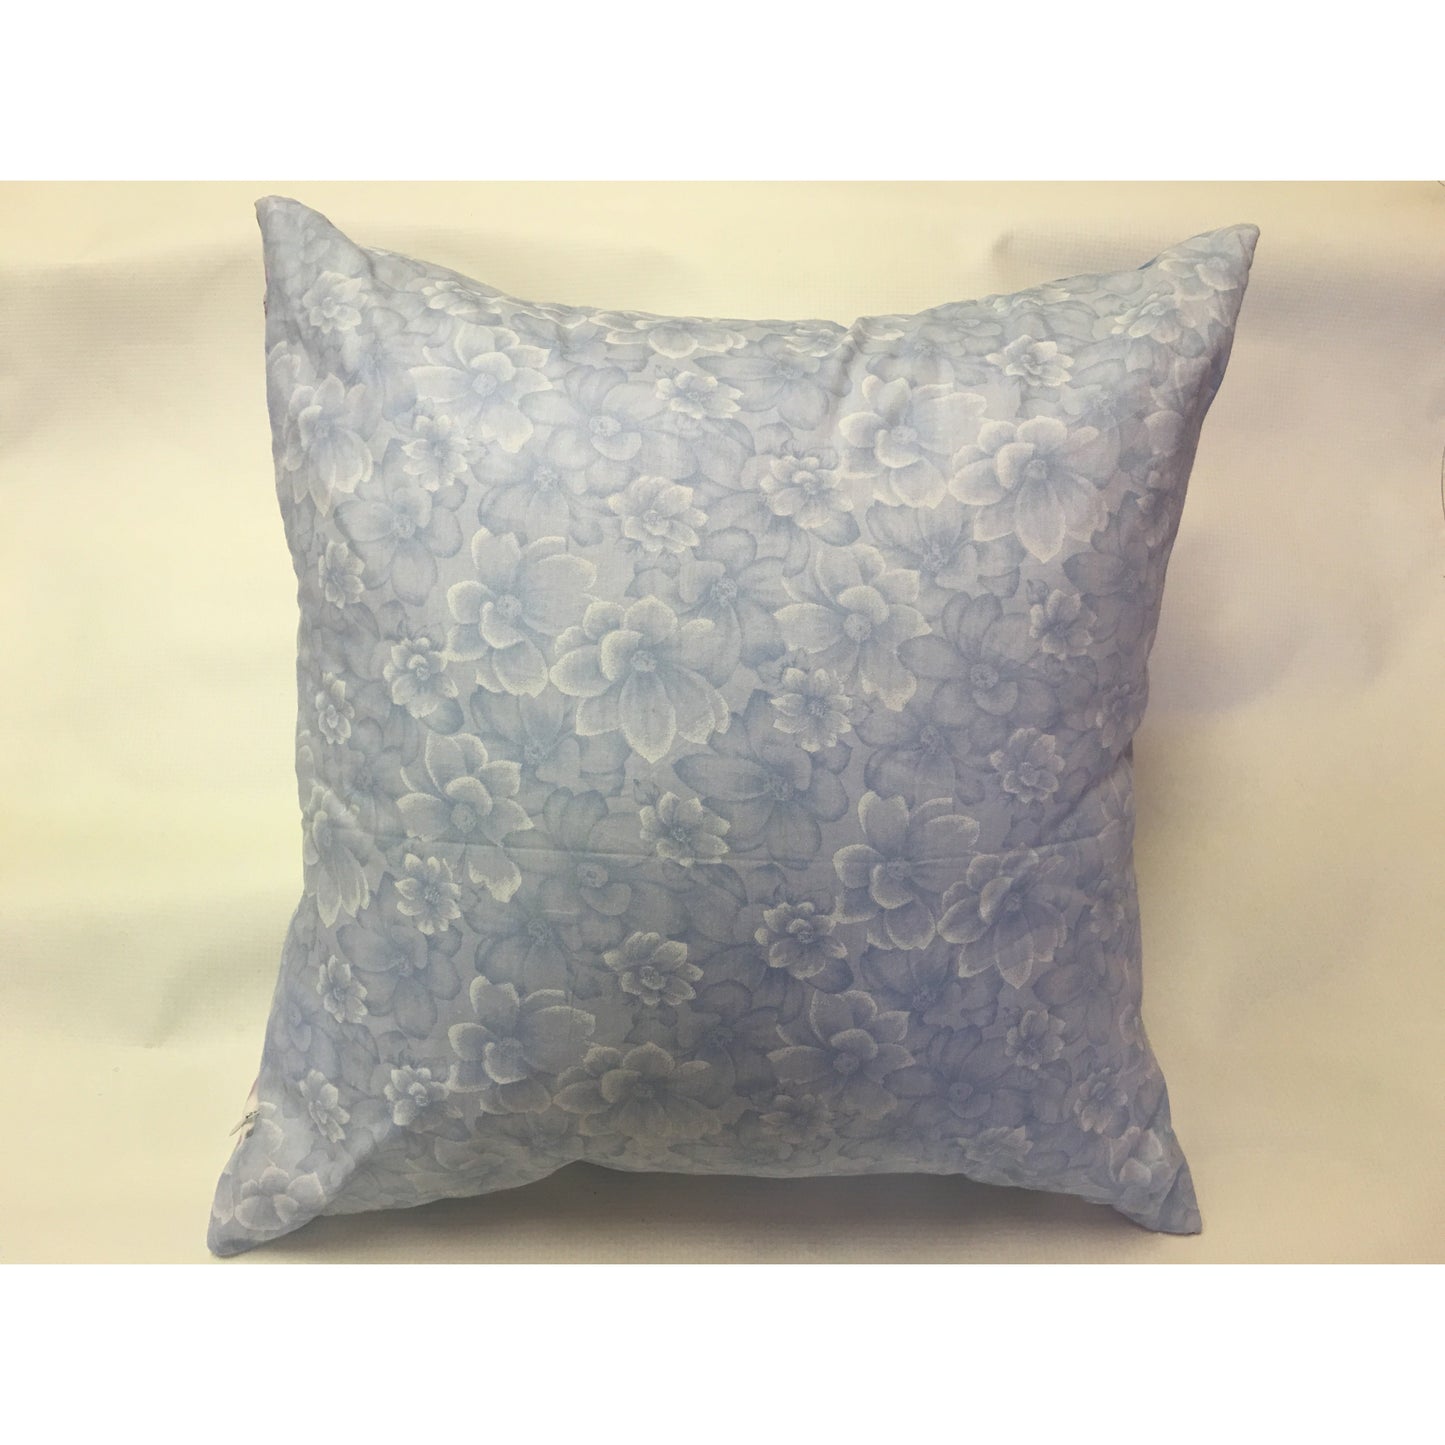 【Lixiu Fragrance】Cotton Square Pillowcase